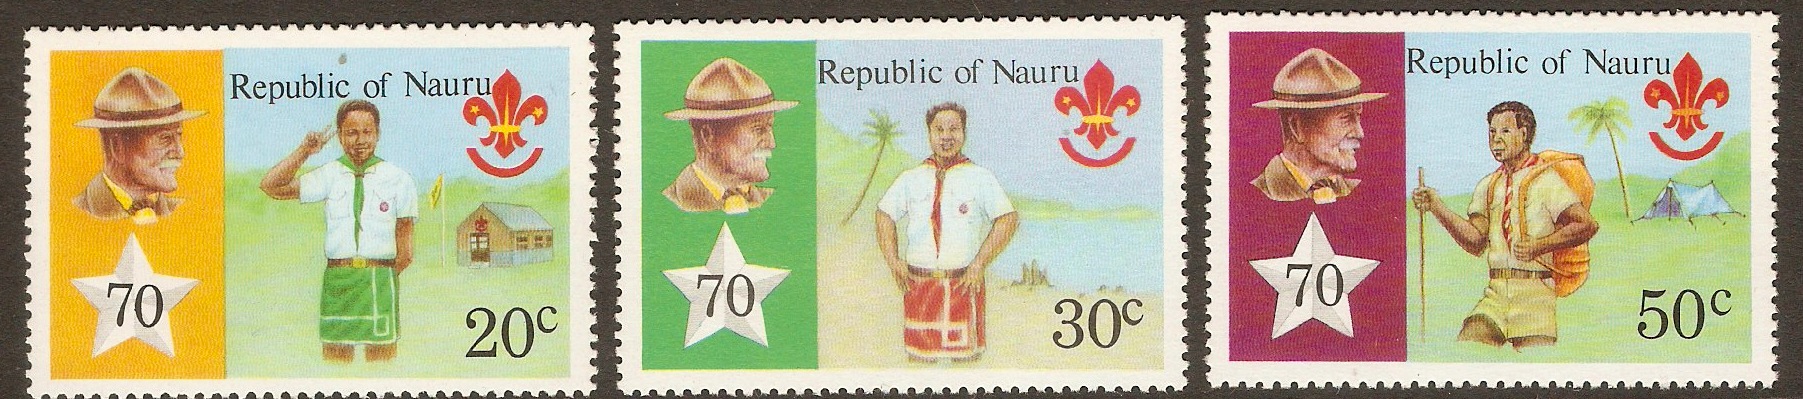 Nauru 1978 Scouts Anniversary set. SG197-SG199.